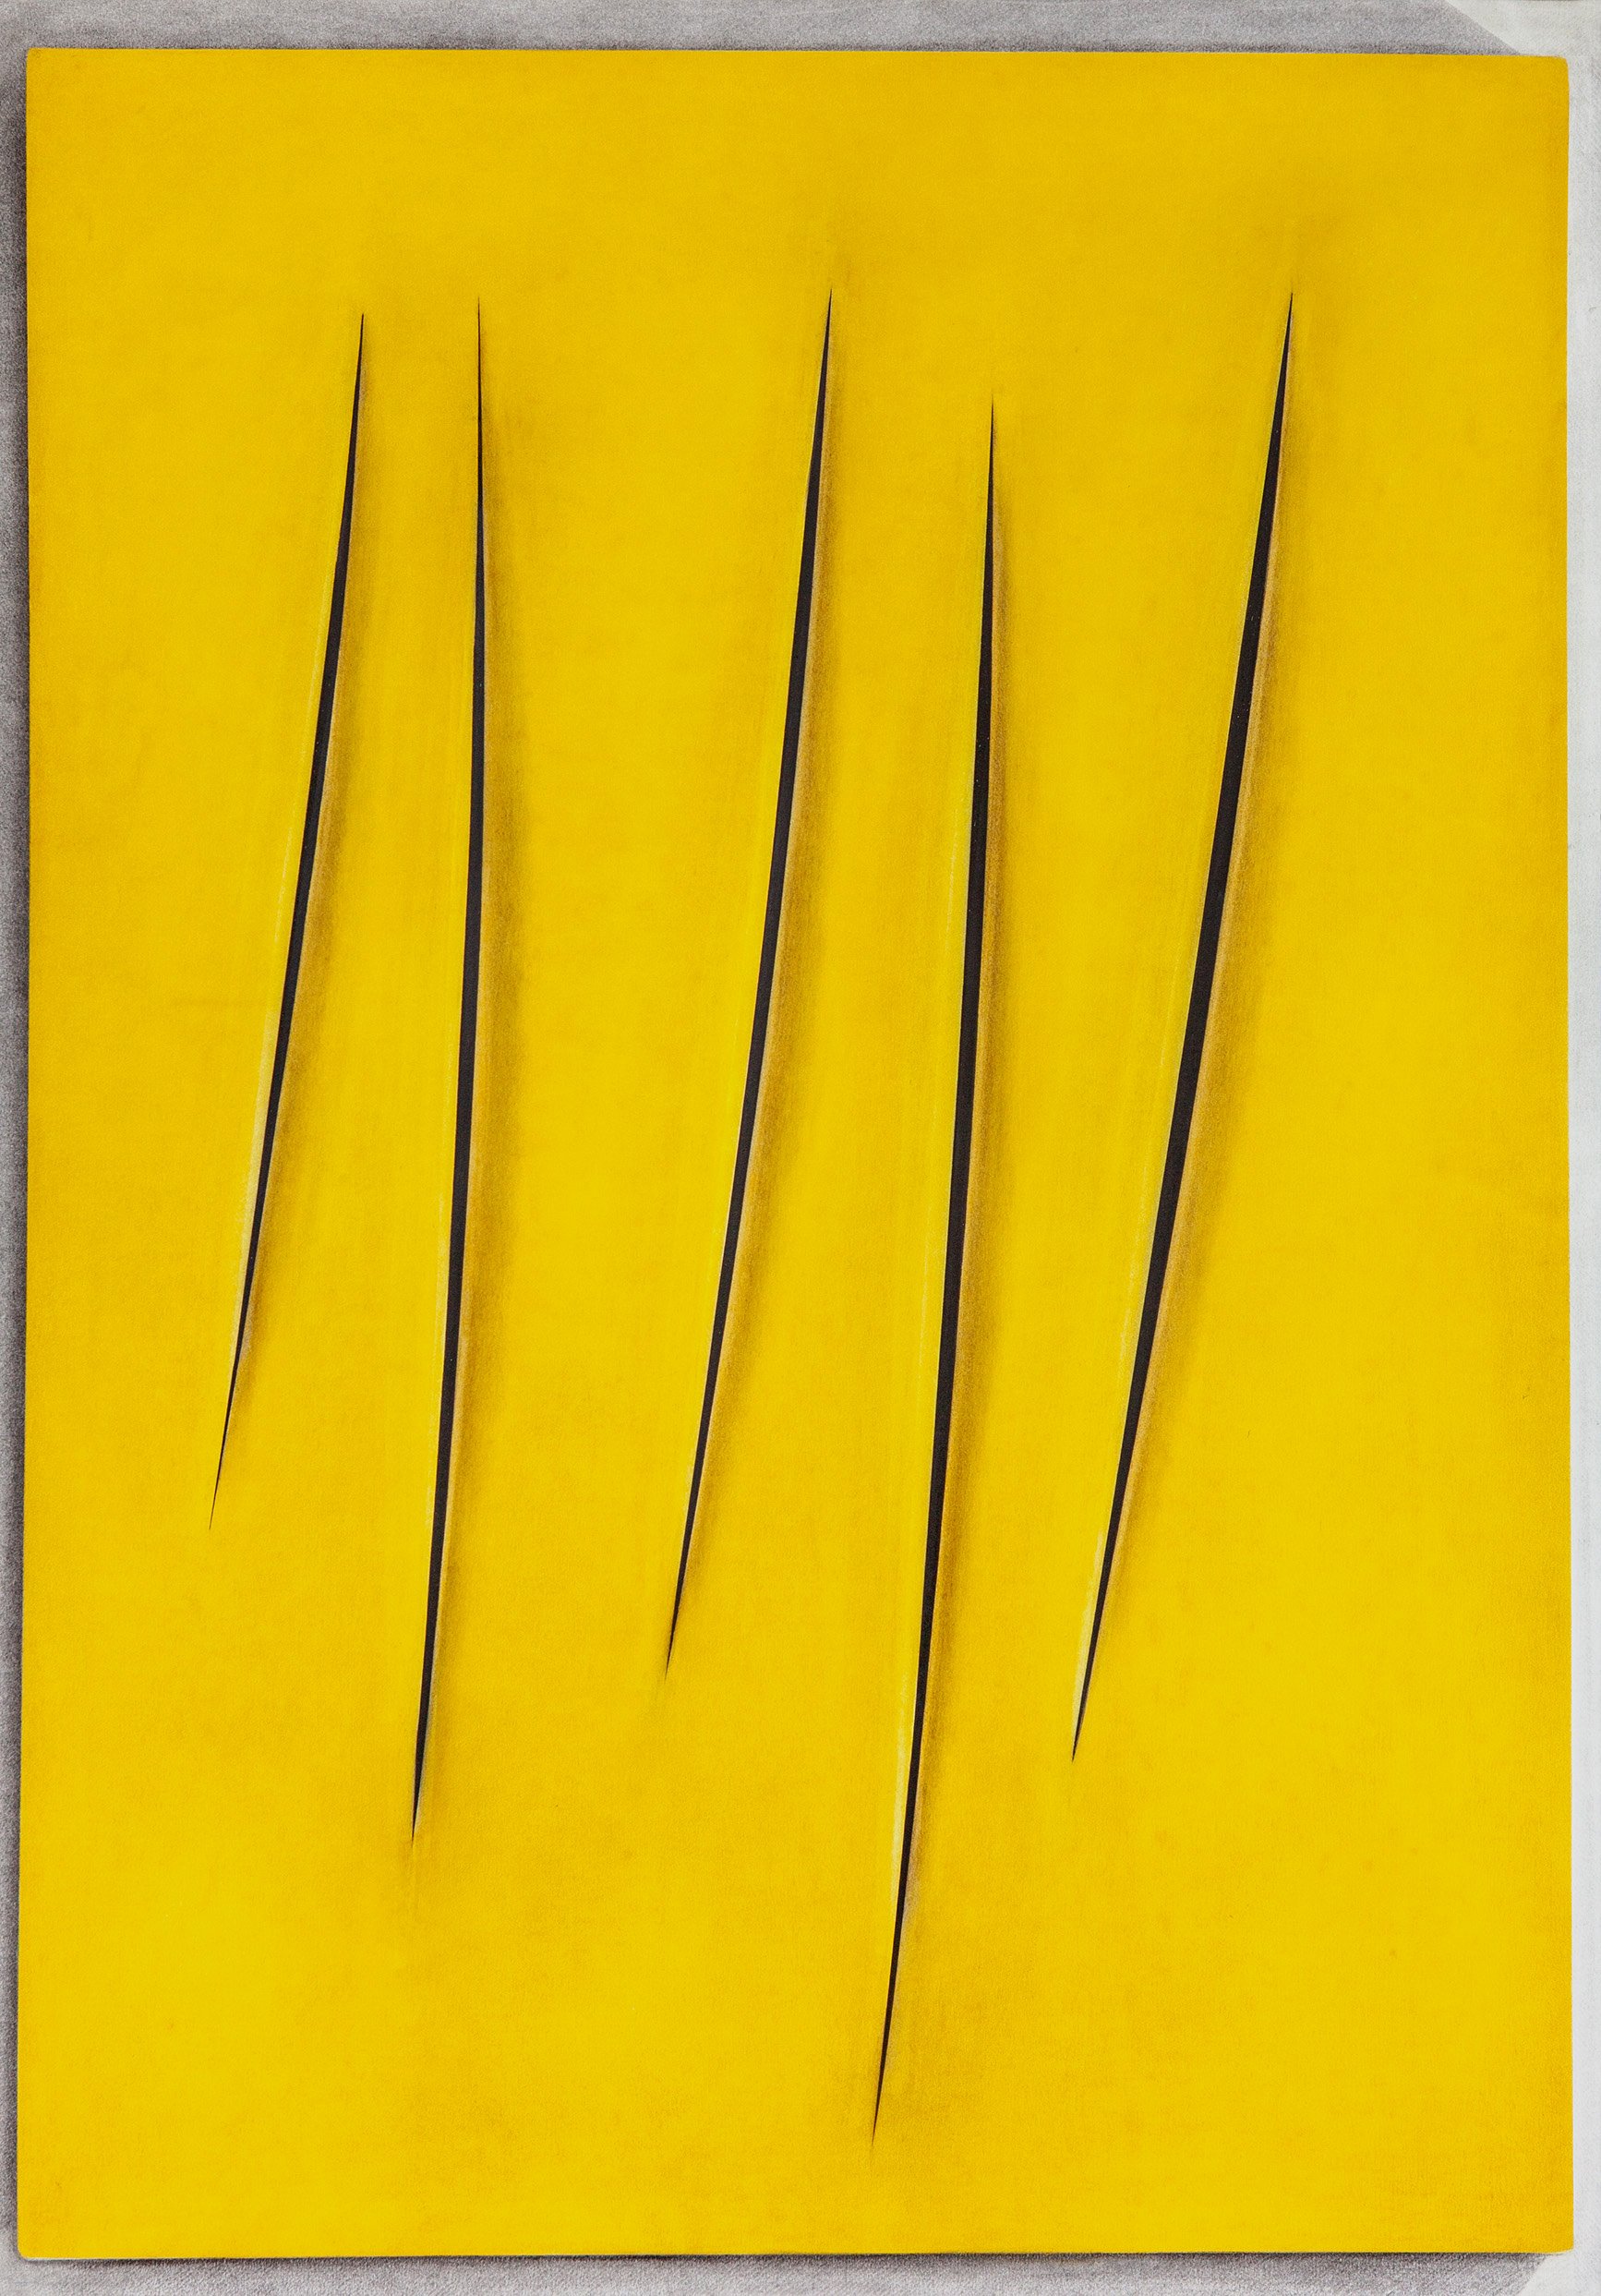  Yellow Fontana, 2019, charcoal on paper, 100 x 70 cm 